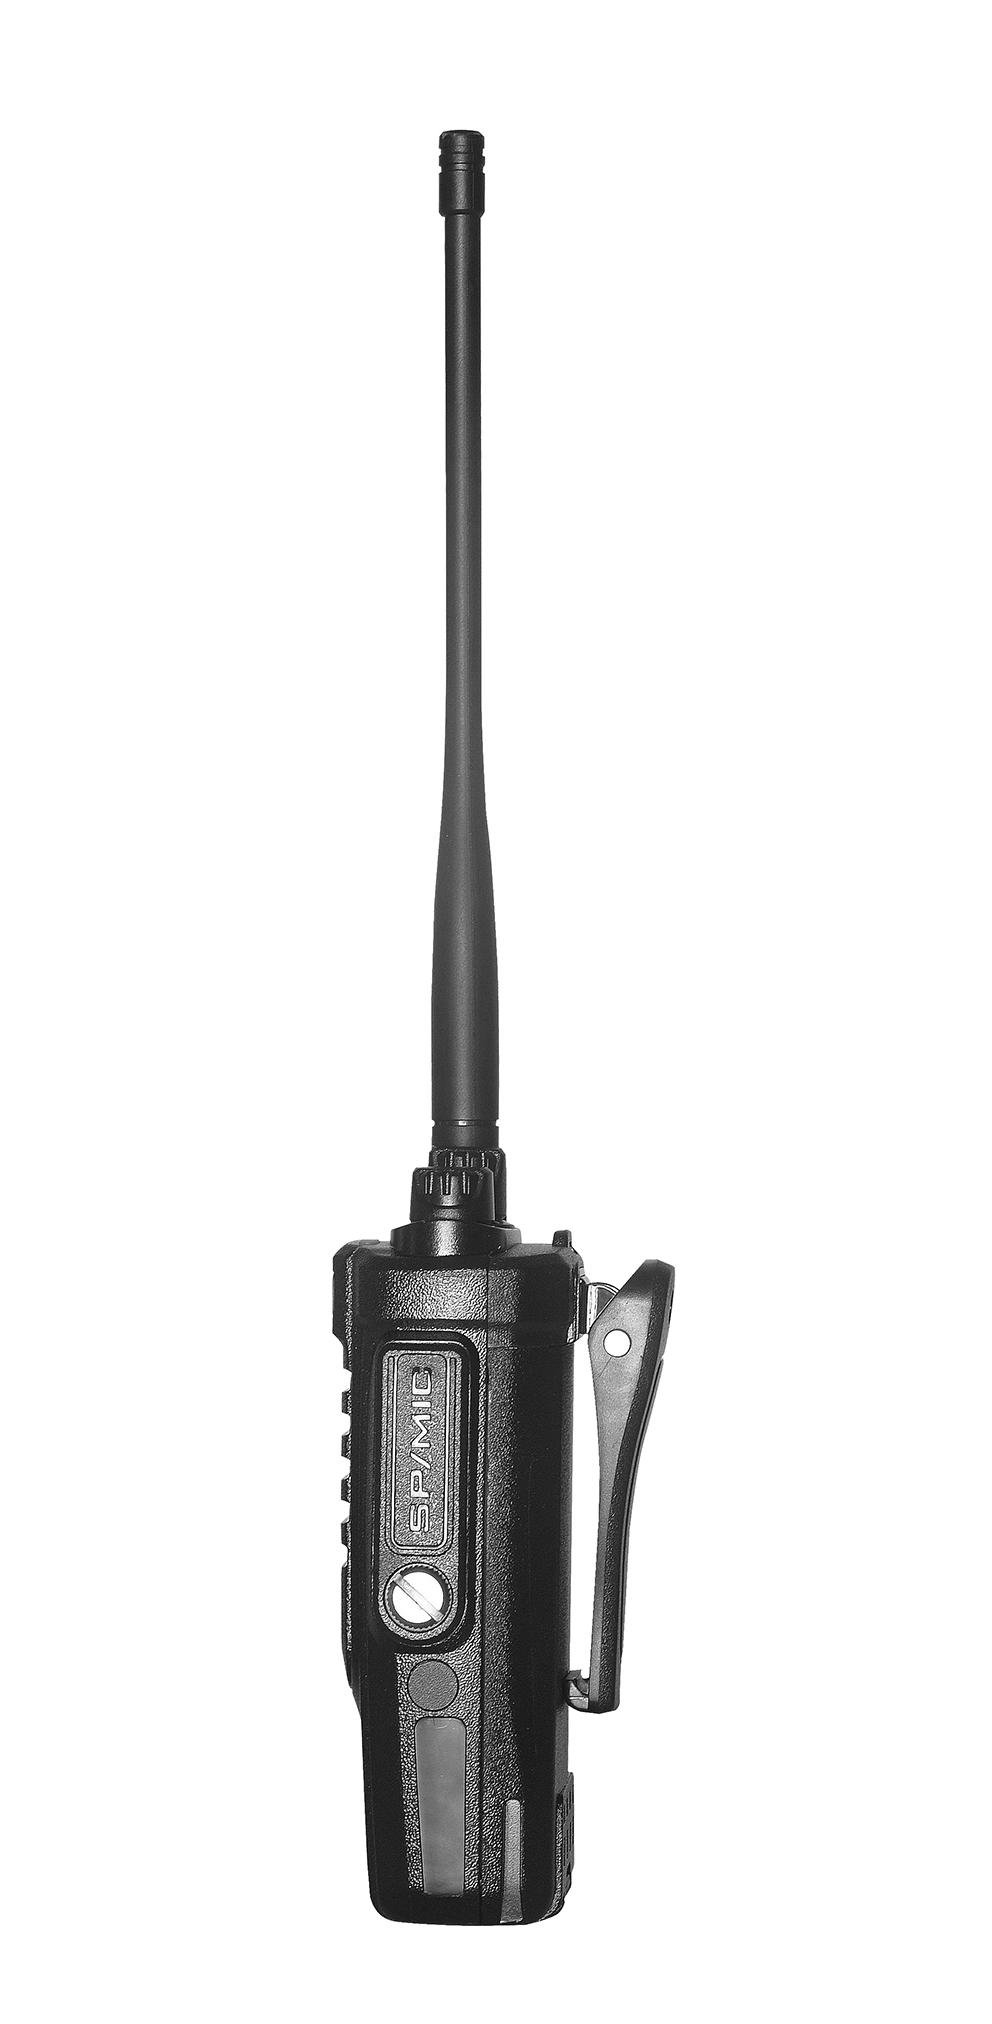 dual band 10W long range radio transmitter FM SOS Function T-650UV 3